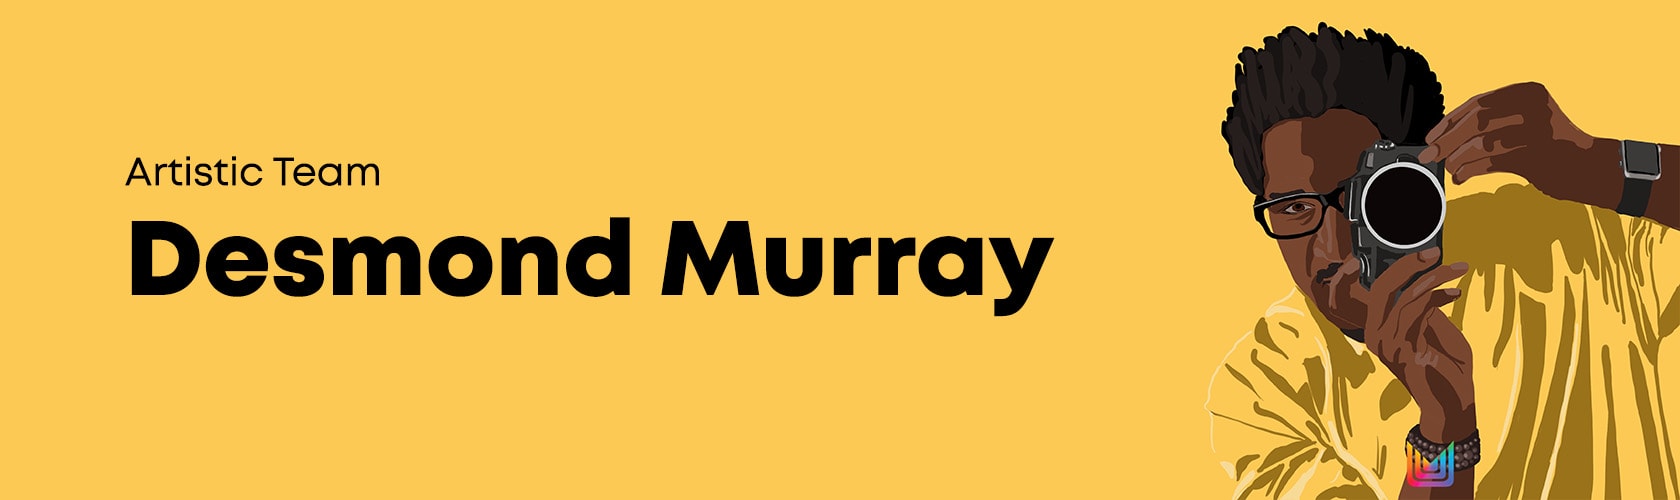 Desmond Murray Banner